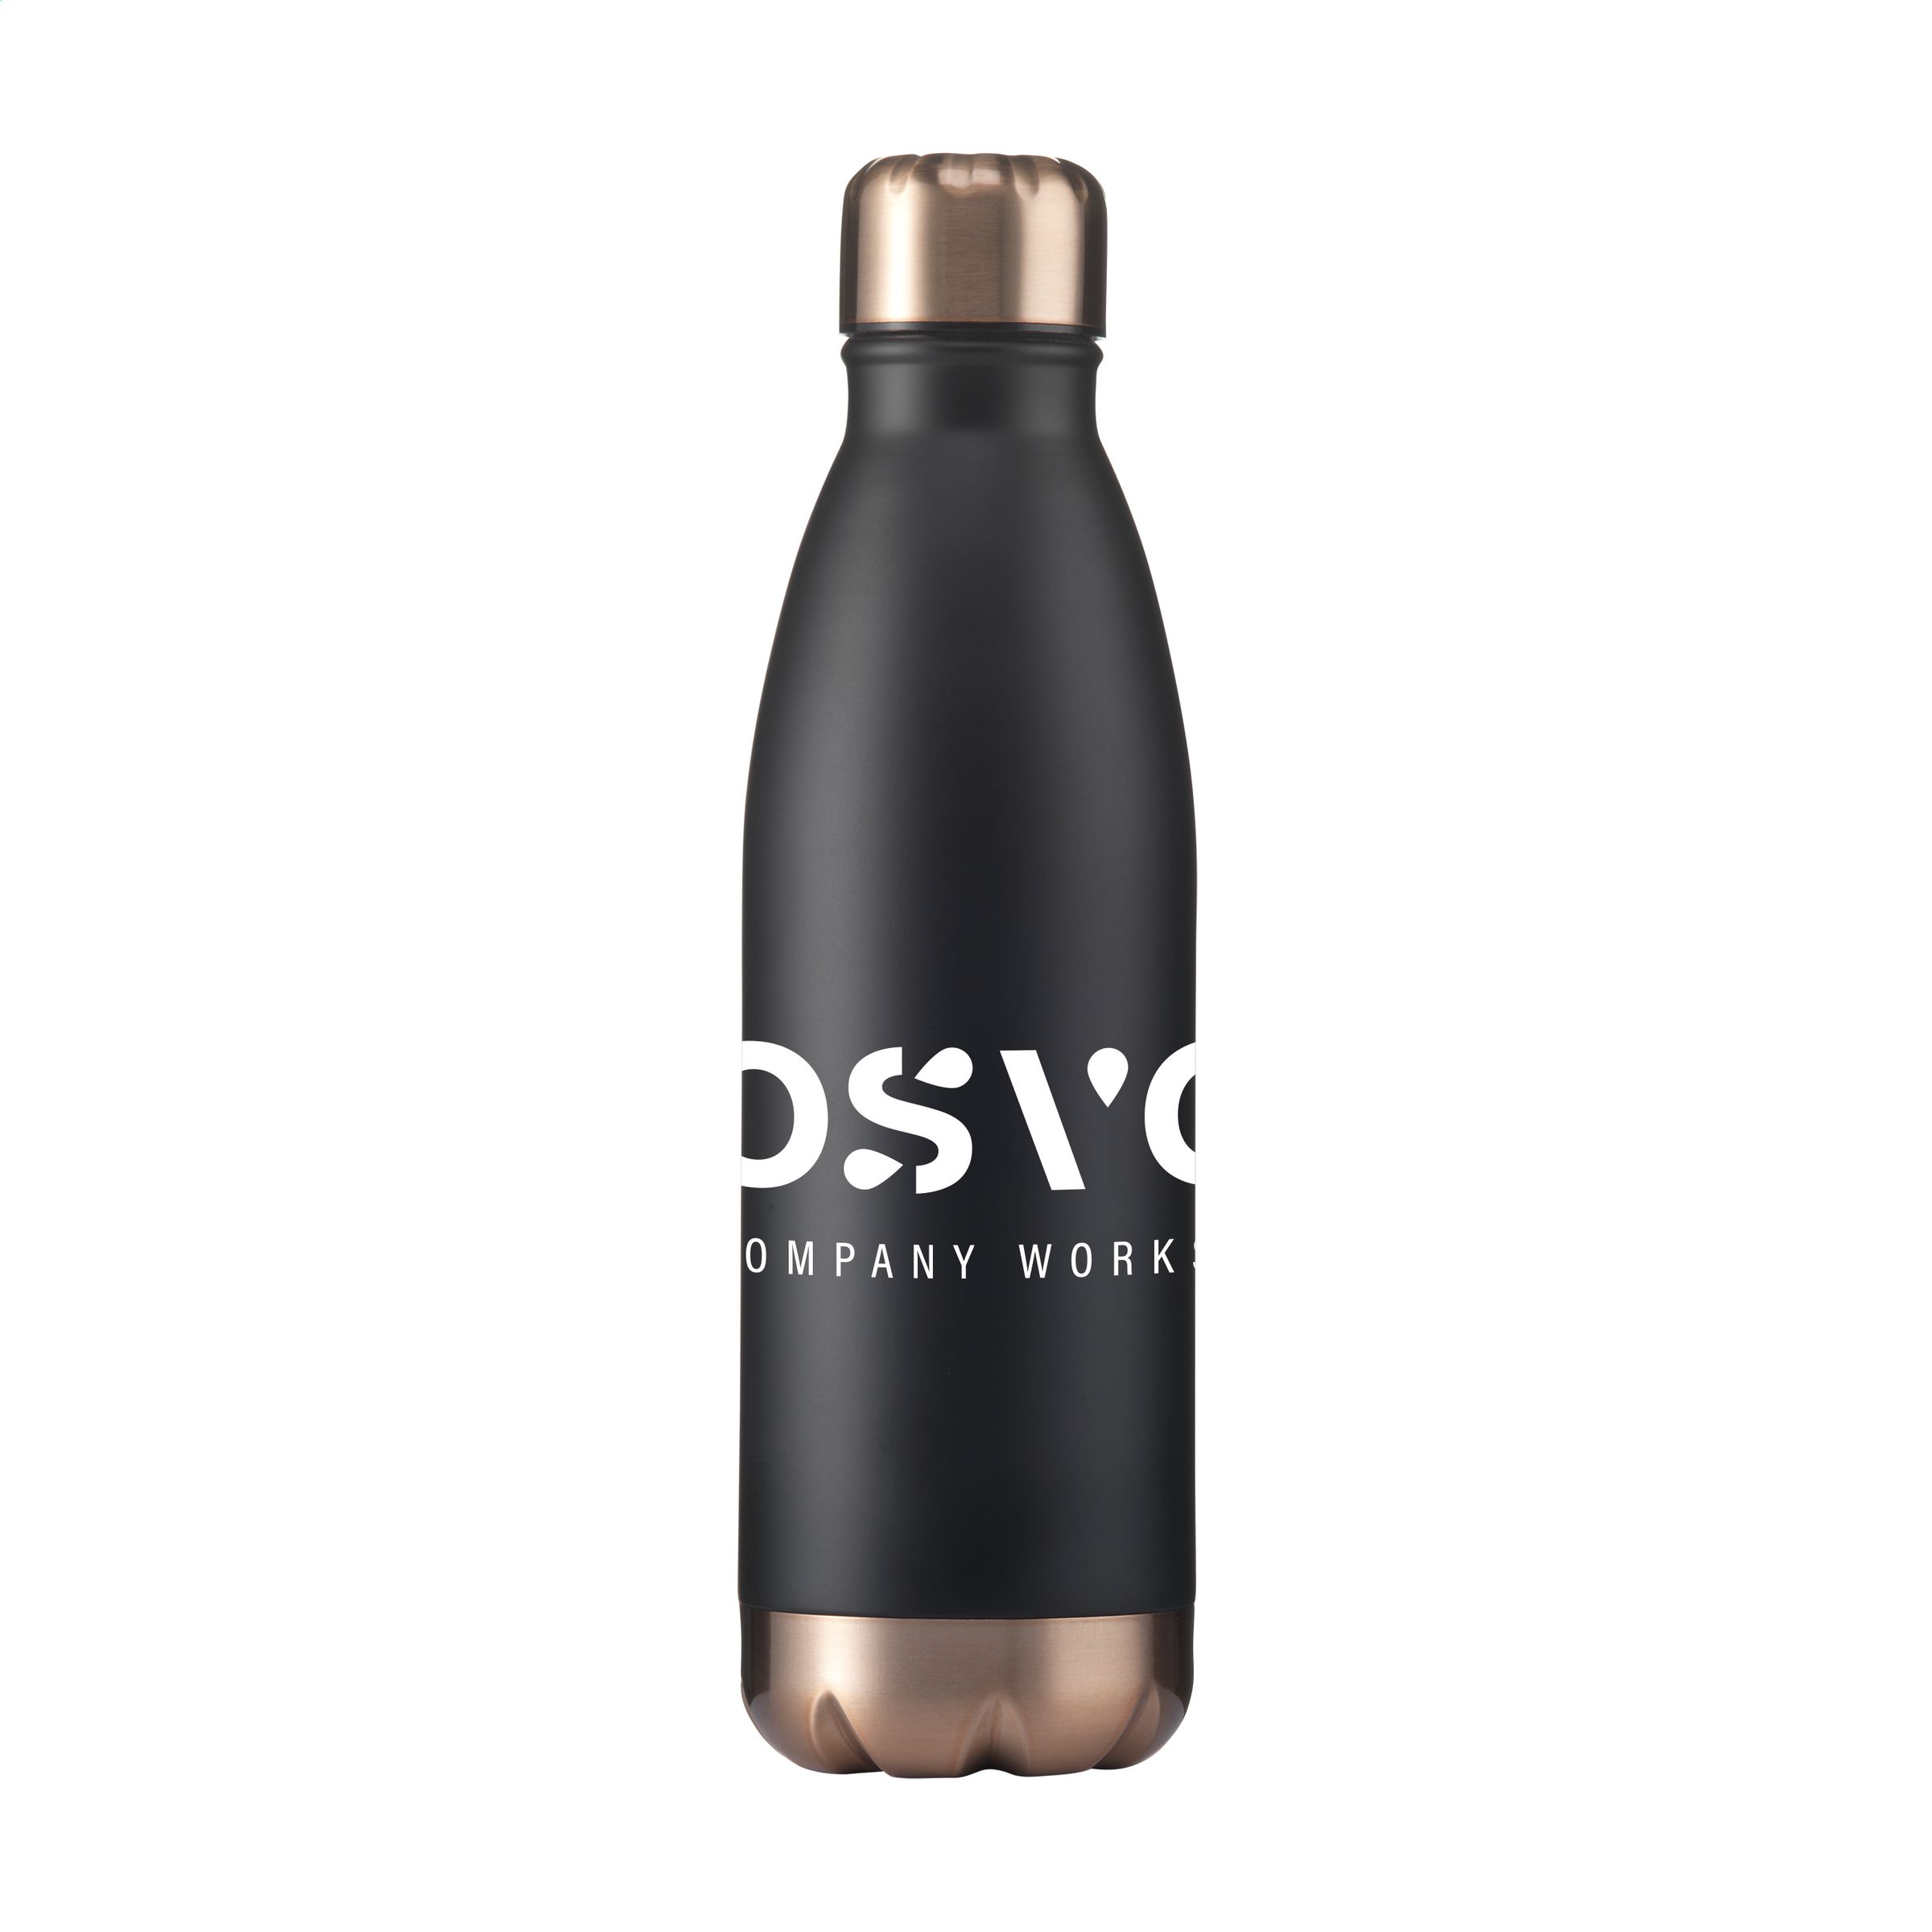 Copper-coated steel vacuum bottle - Ravenscar - Burton